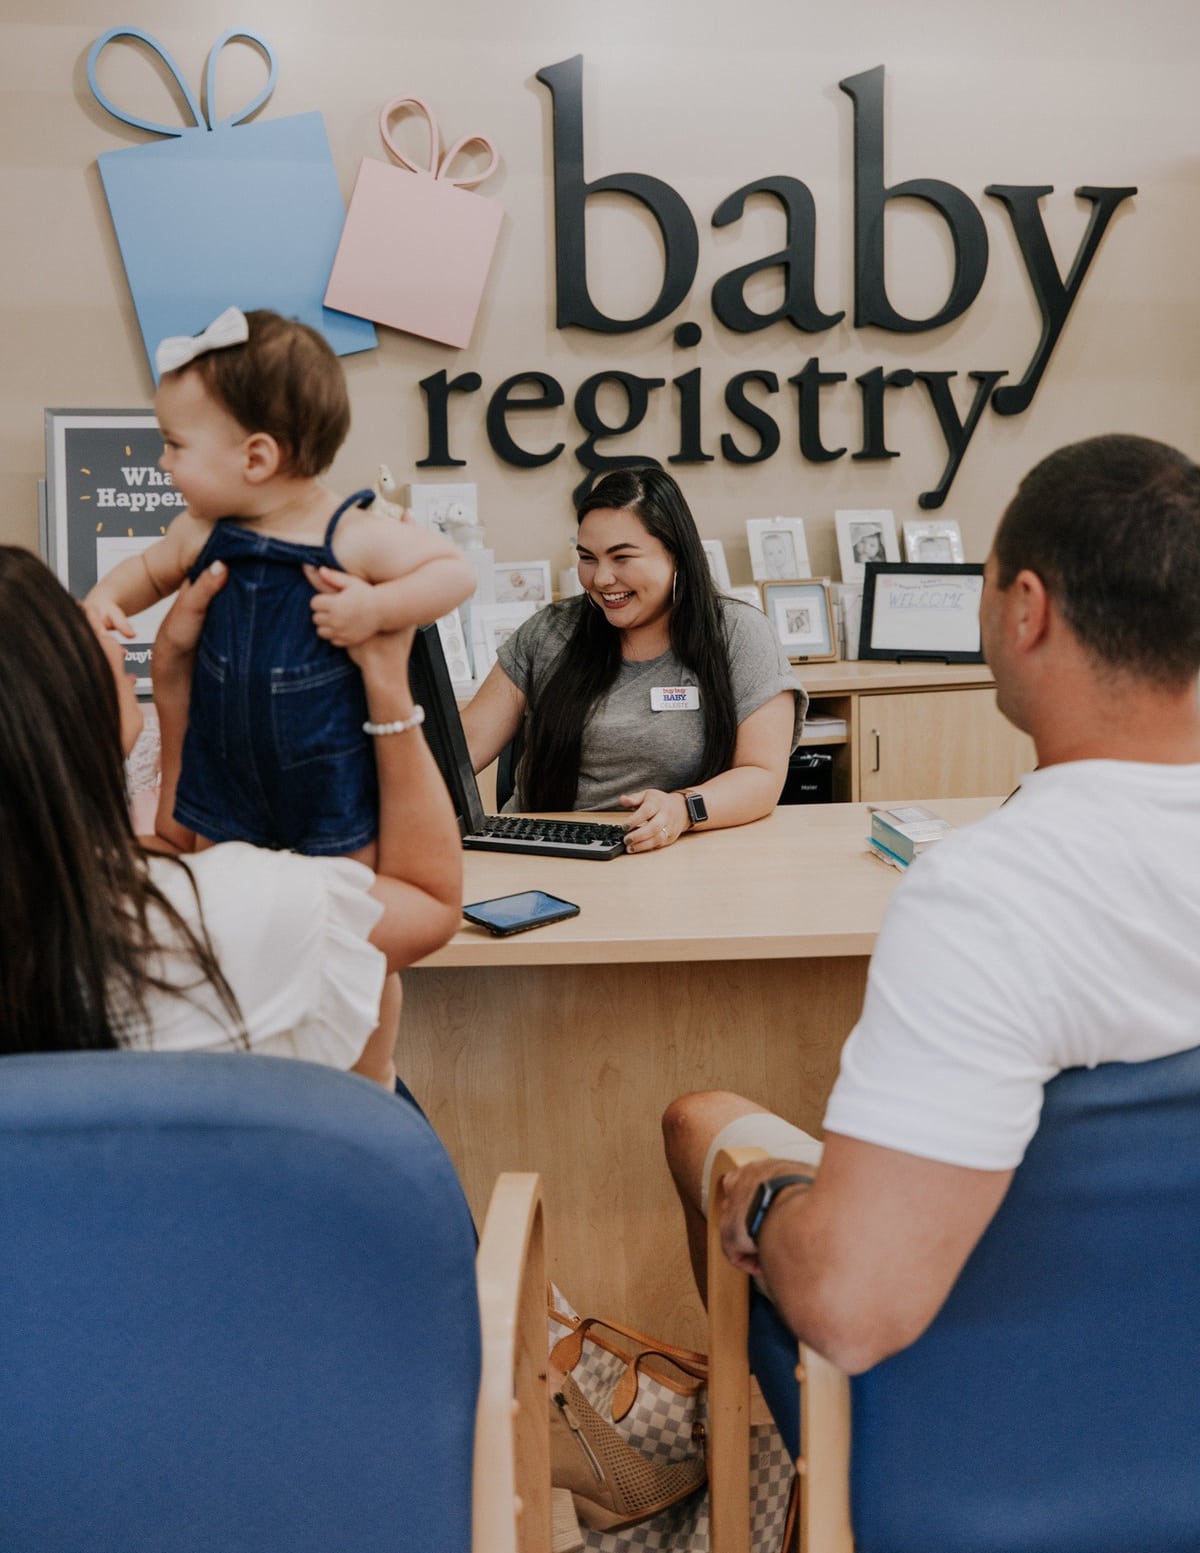 buybuy baby registry